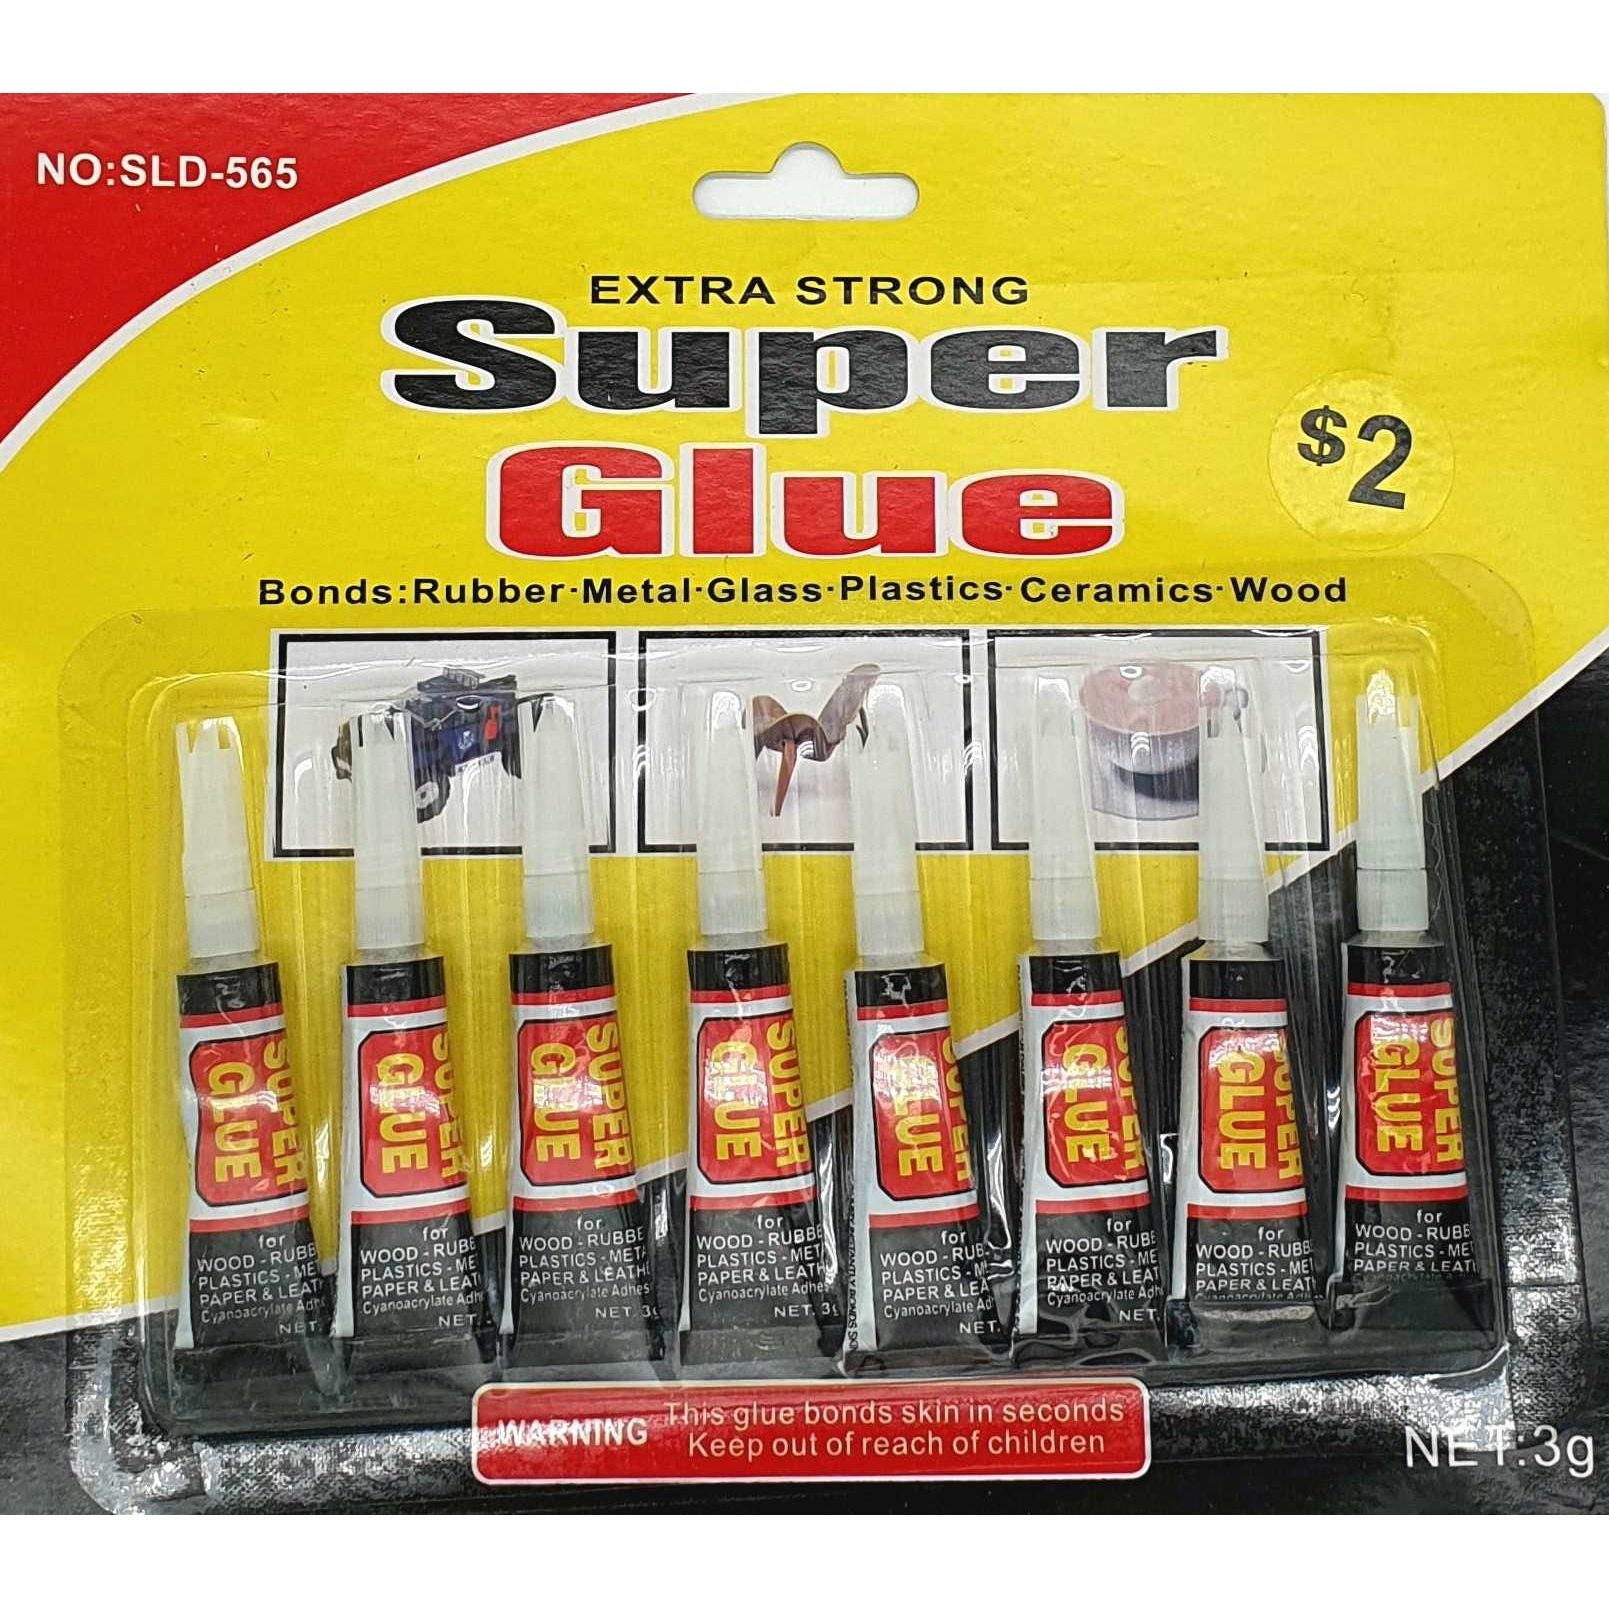 Super Glue - Dollars and Sense